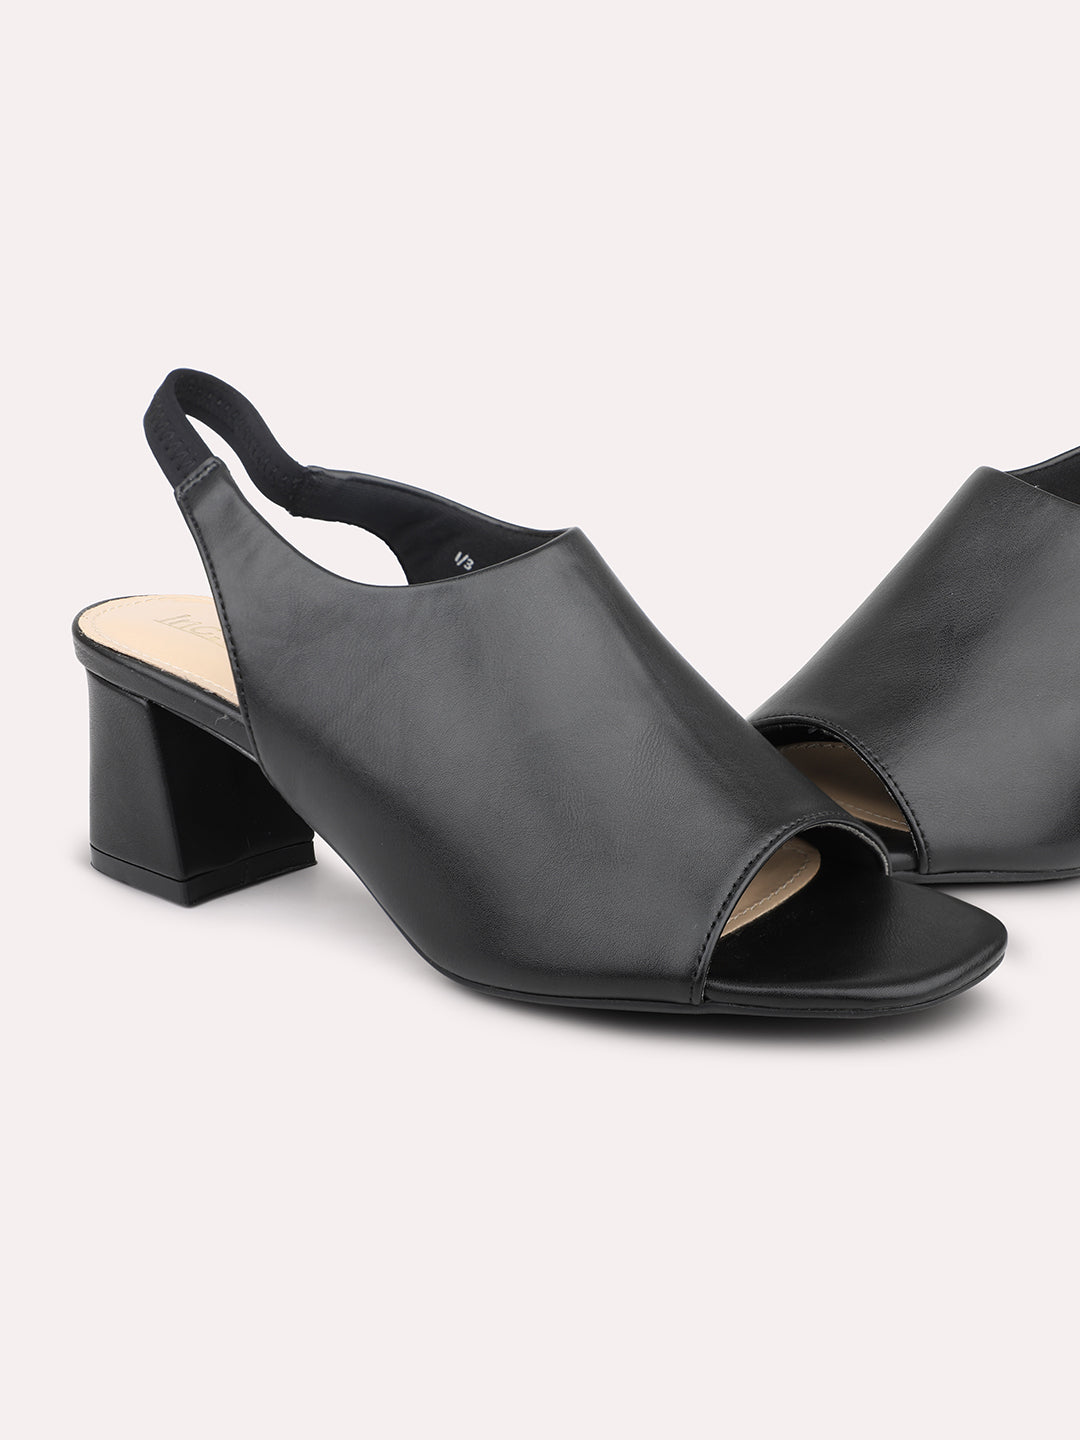 Womens Cross Strap High Heels Block Sandals Chunky Back Zip Shoe Peep Toe  Summer | eBay